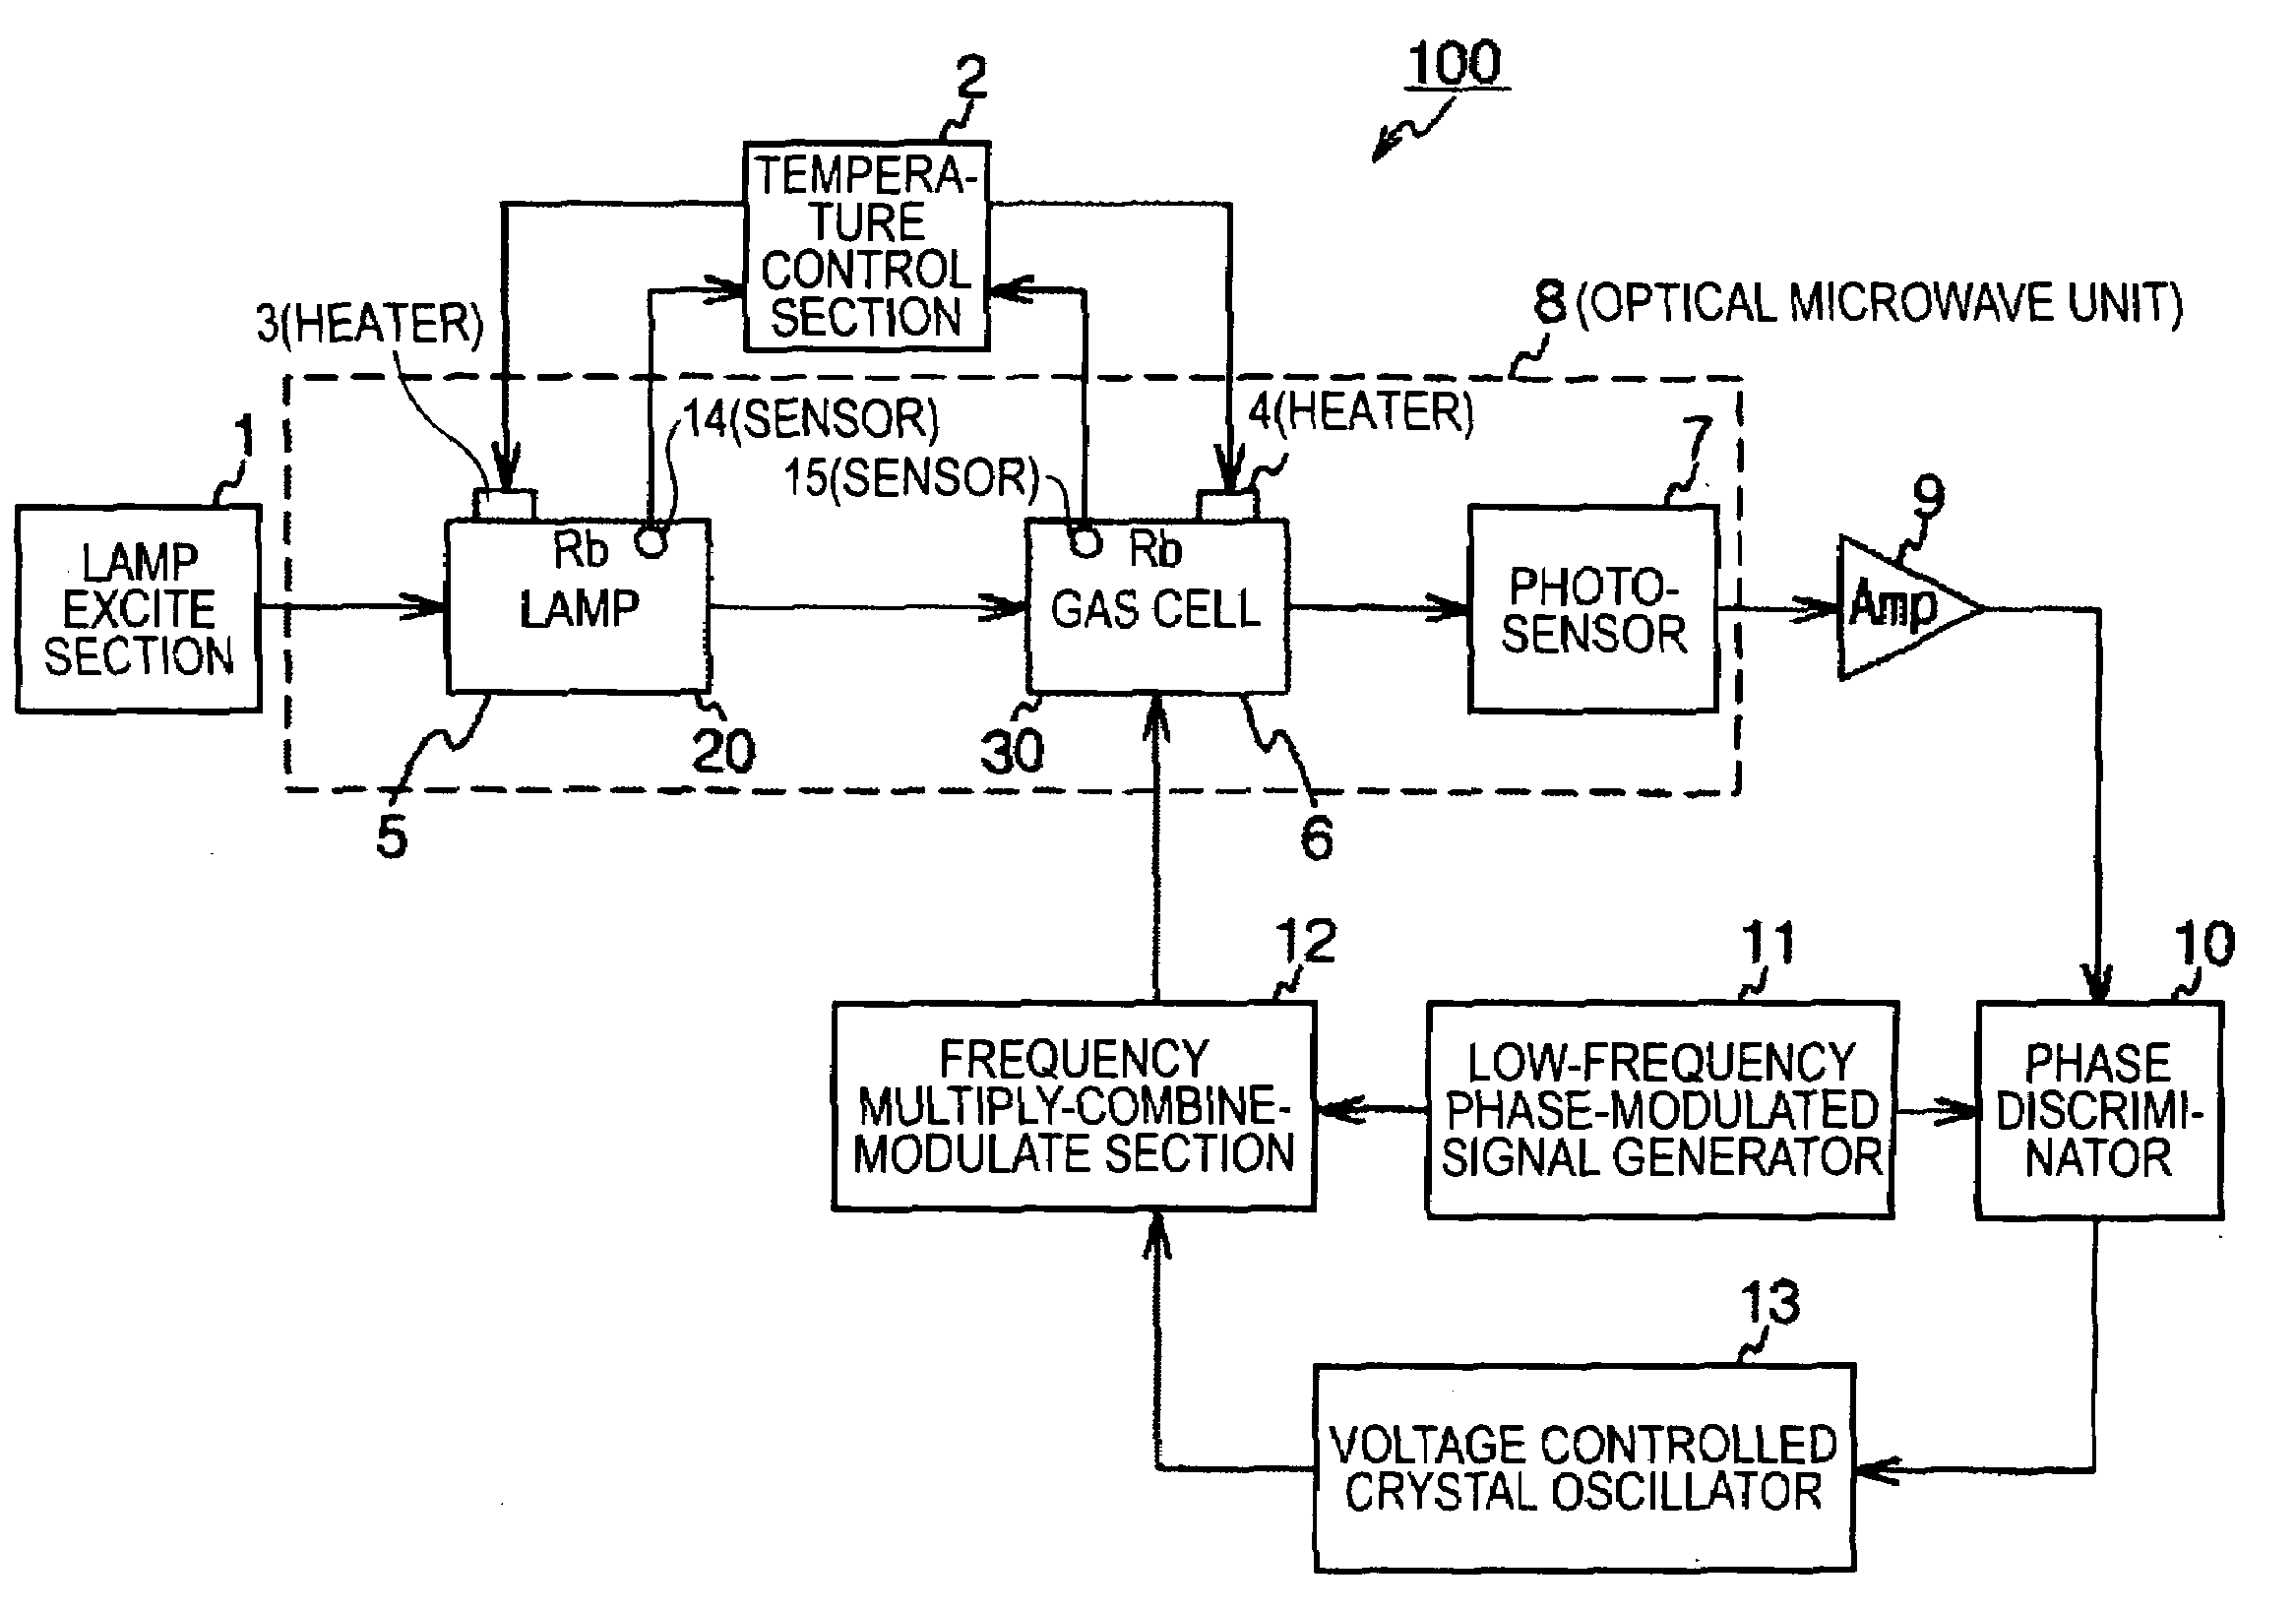 Atomic oscillator, method for sealing temperature detecting means, and rubidium atomic oscillator